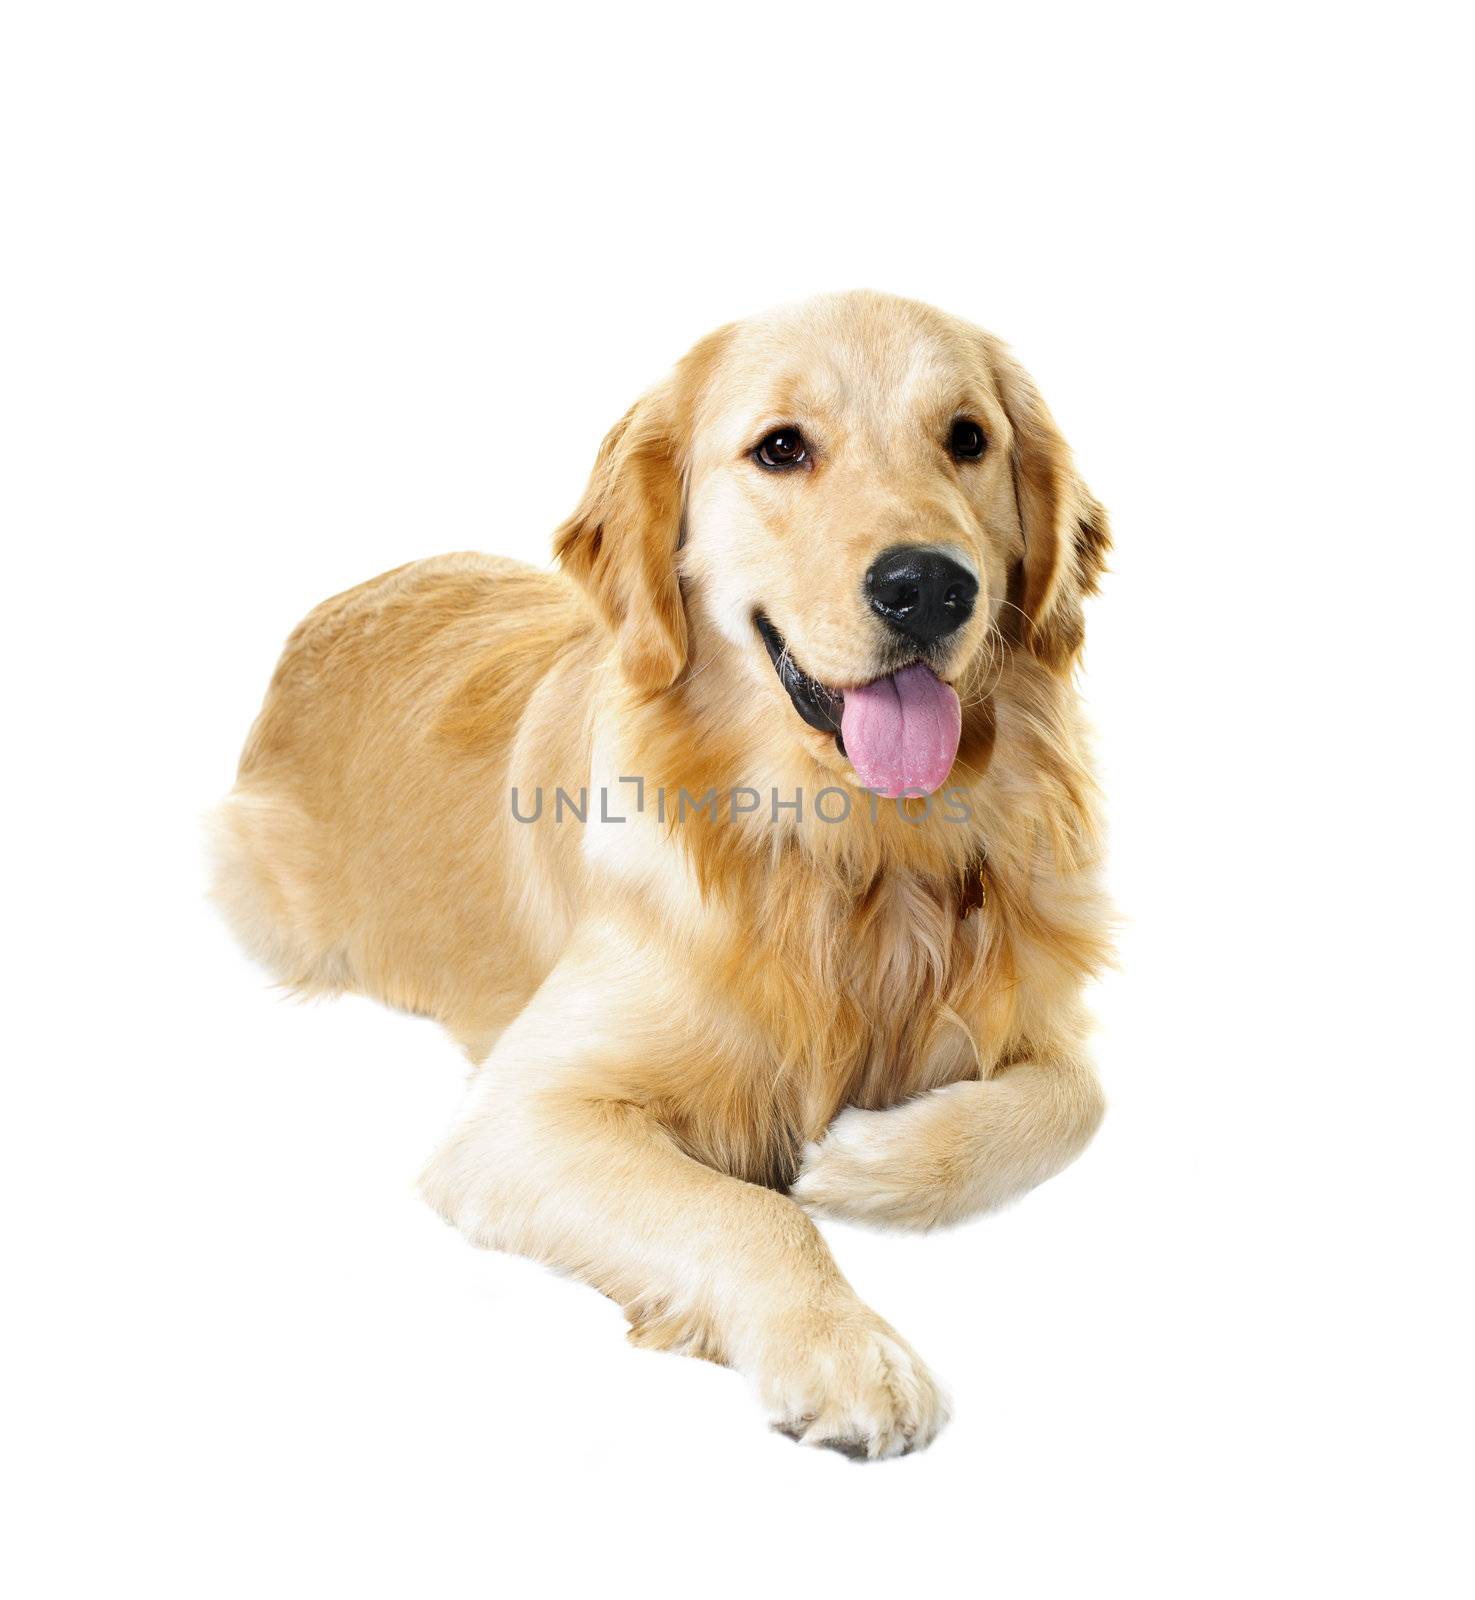 Golden retriever dog by elenathewise